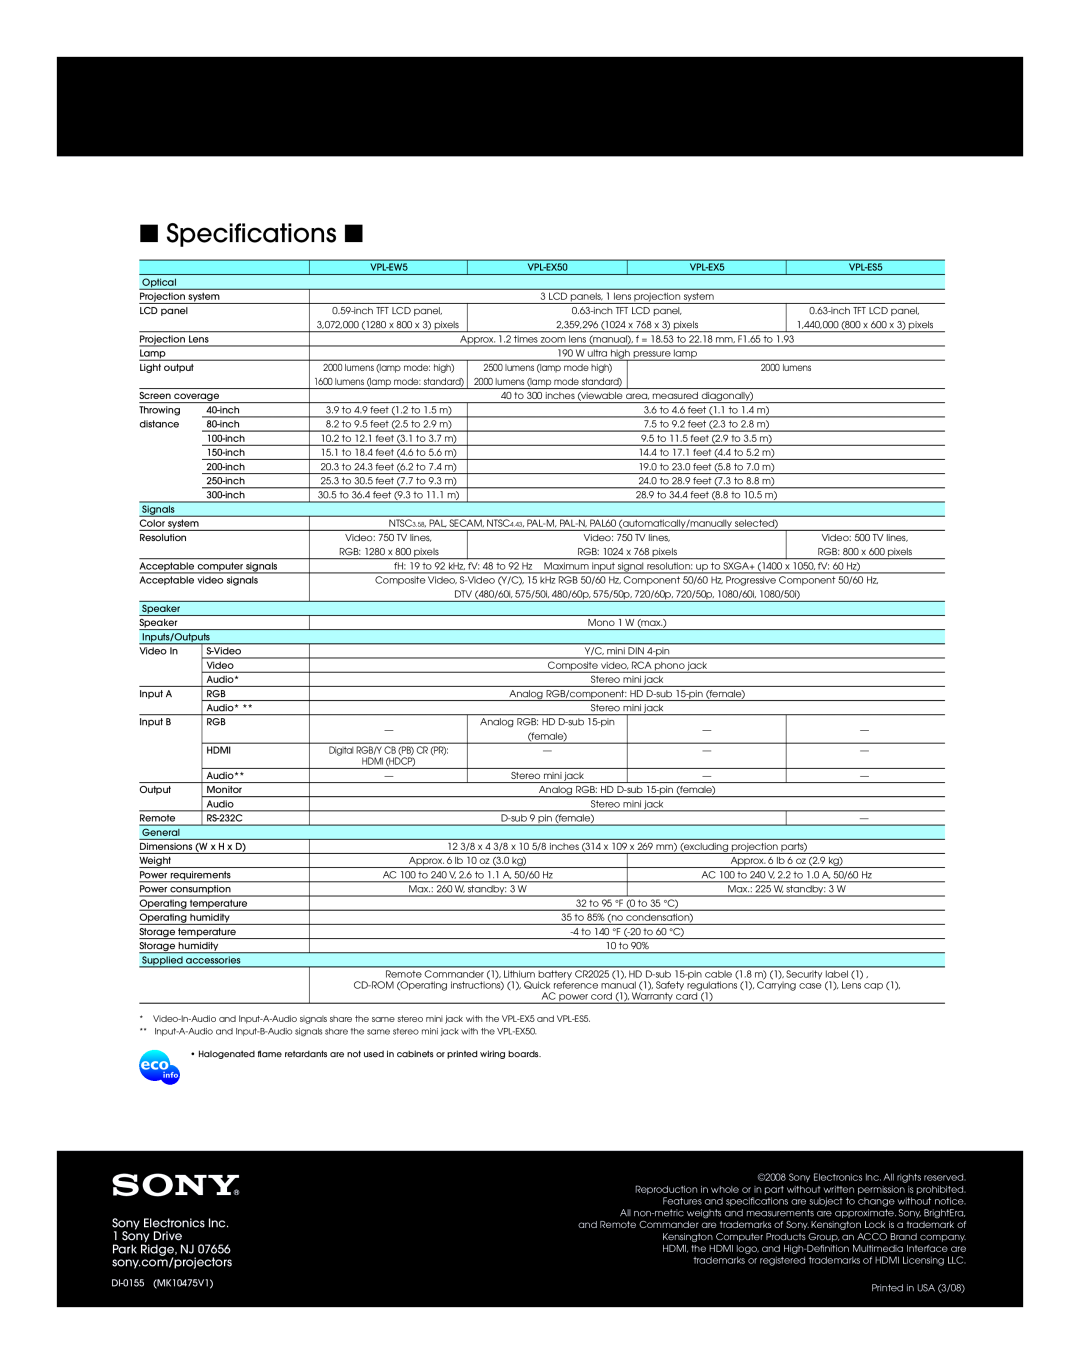 Sony VPL-ES5, VPL-EX50 manual Specifications, Sony Electronics Inc. 1 Sony Drive, Park Ridge, NJ 07656 sony.com/projectors 